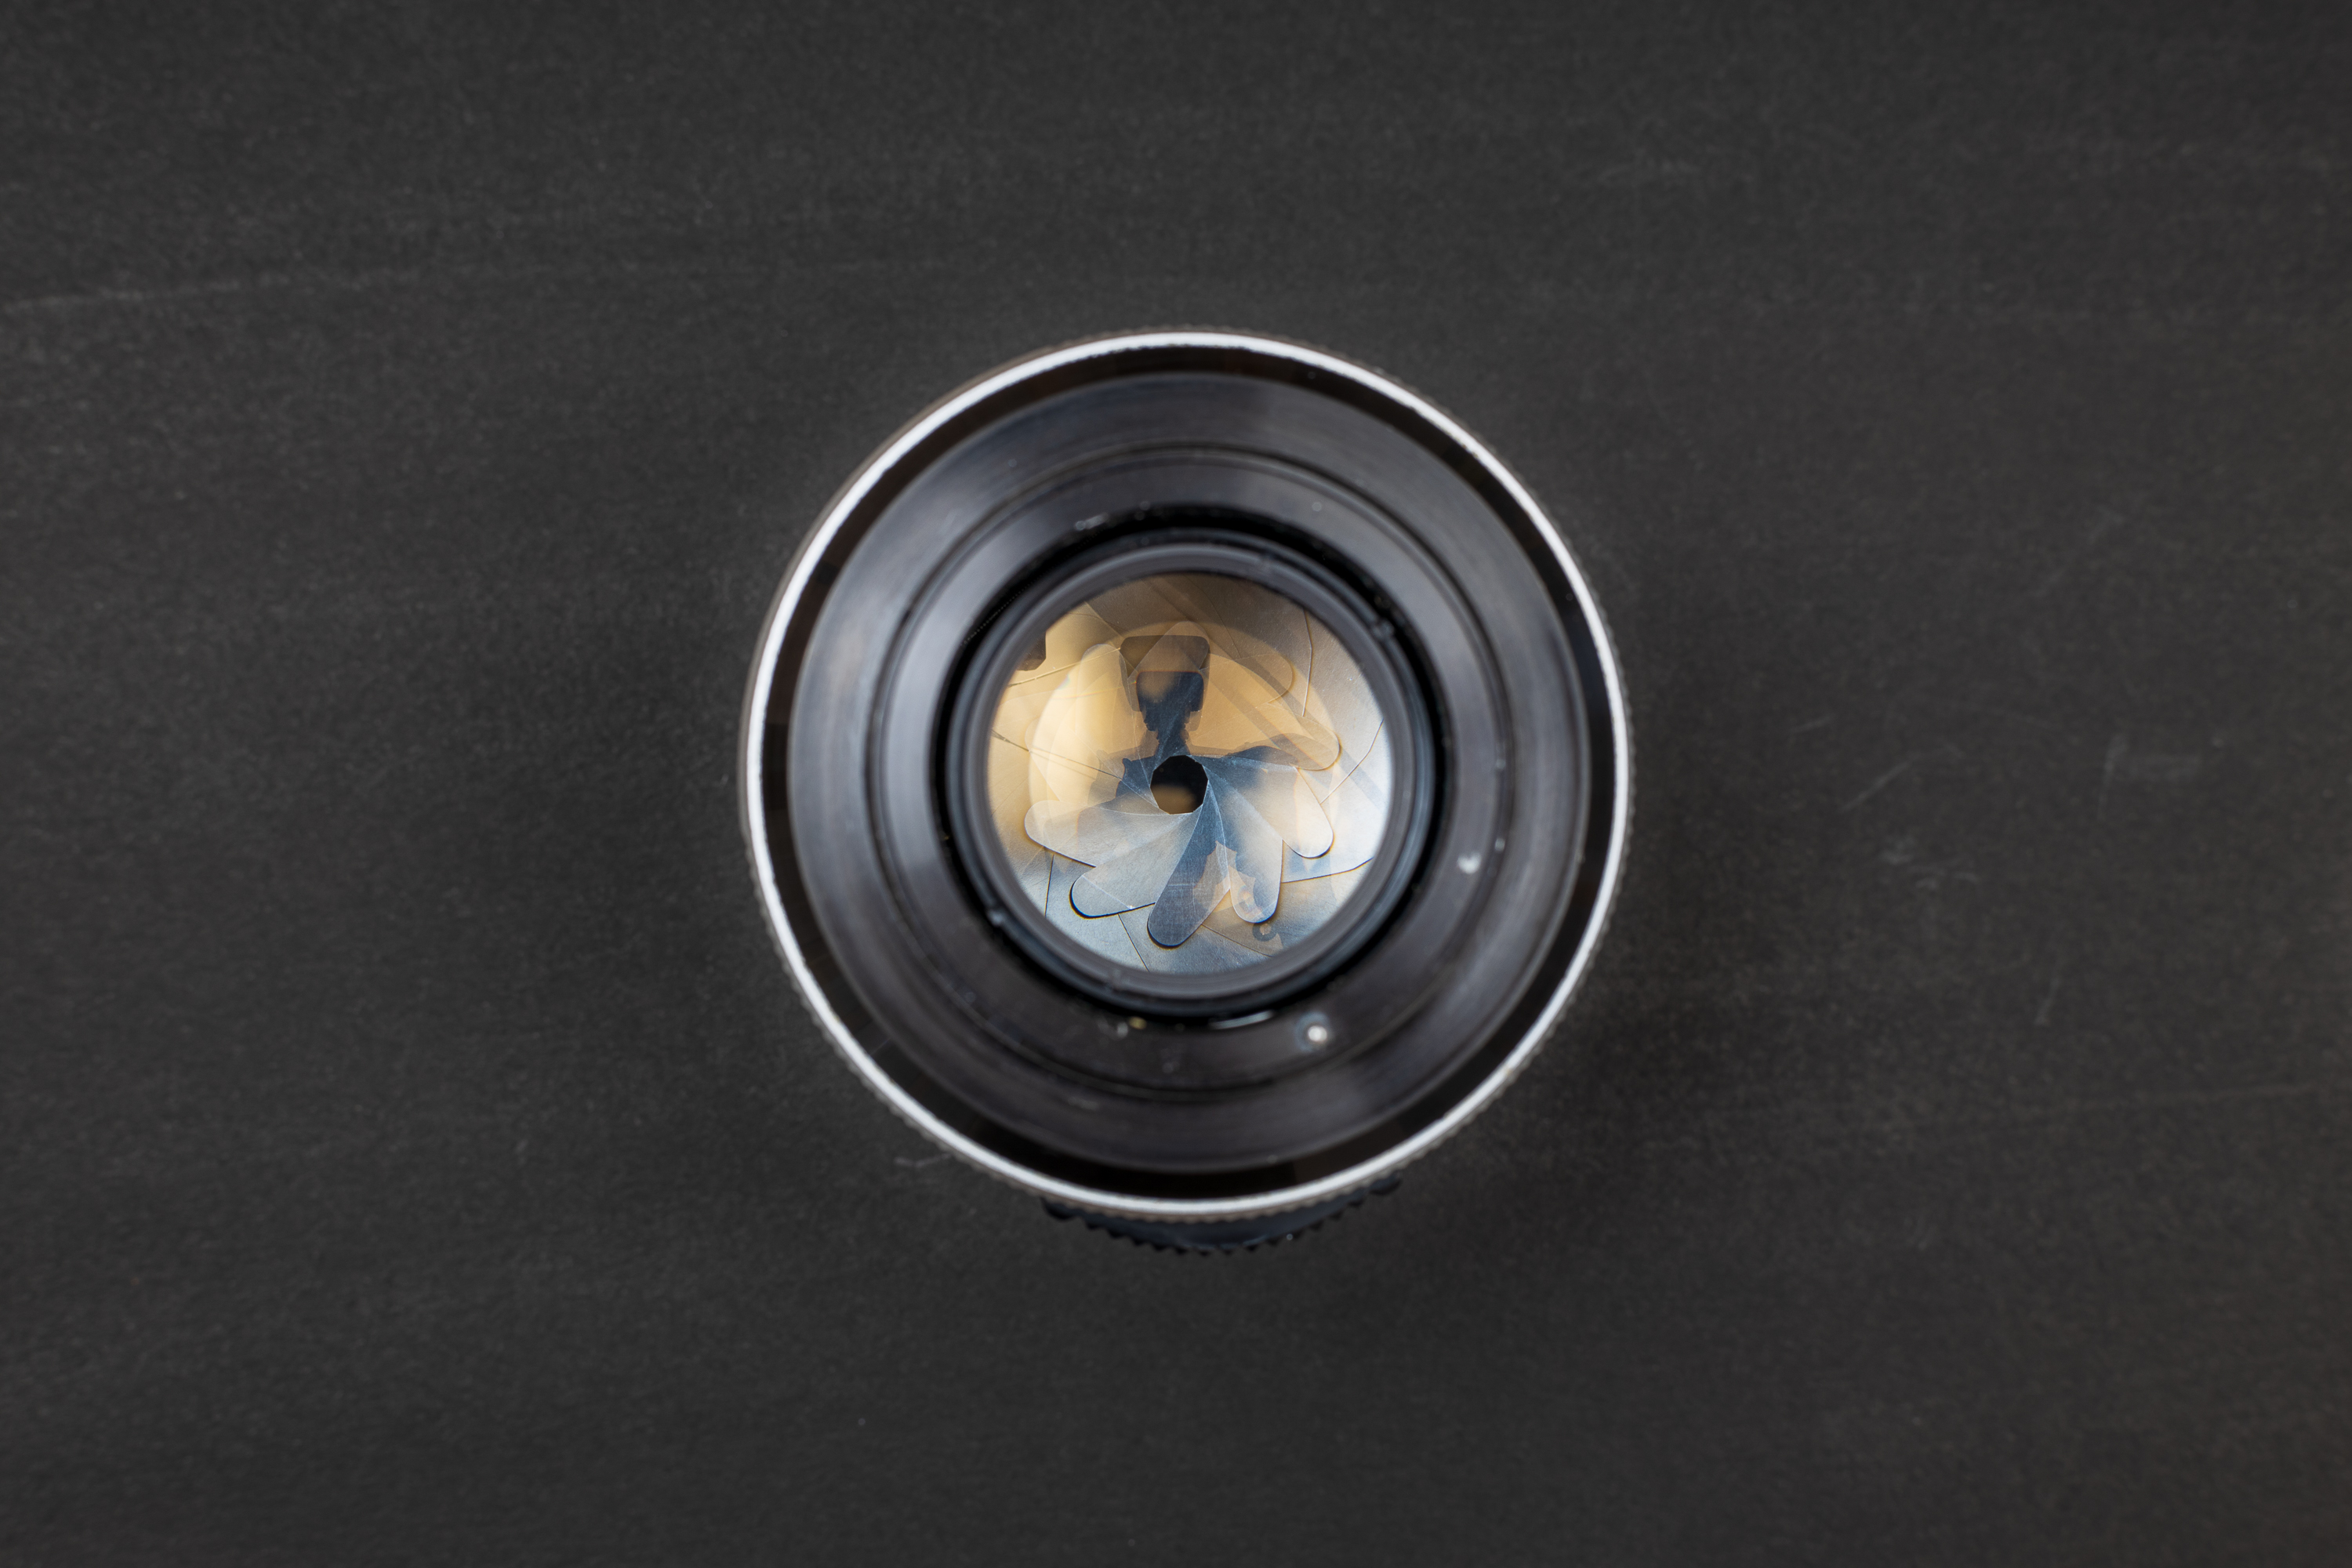 Mamiya Sekor 58mm f1.7 Lens Review - Lens Legend